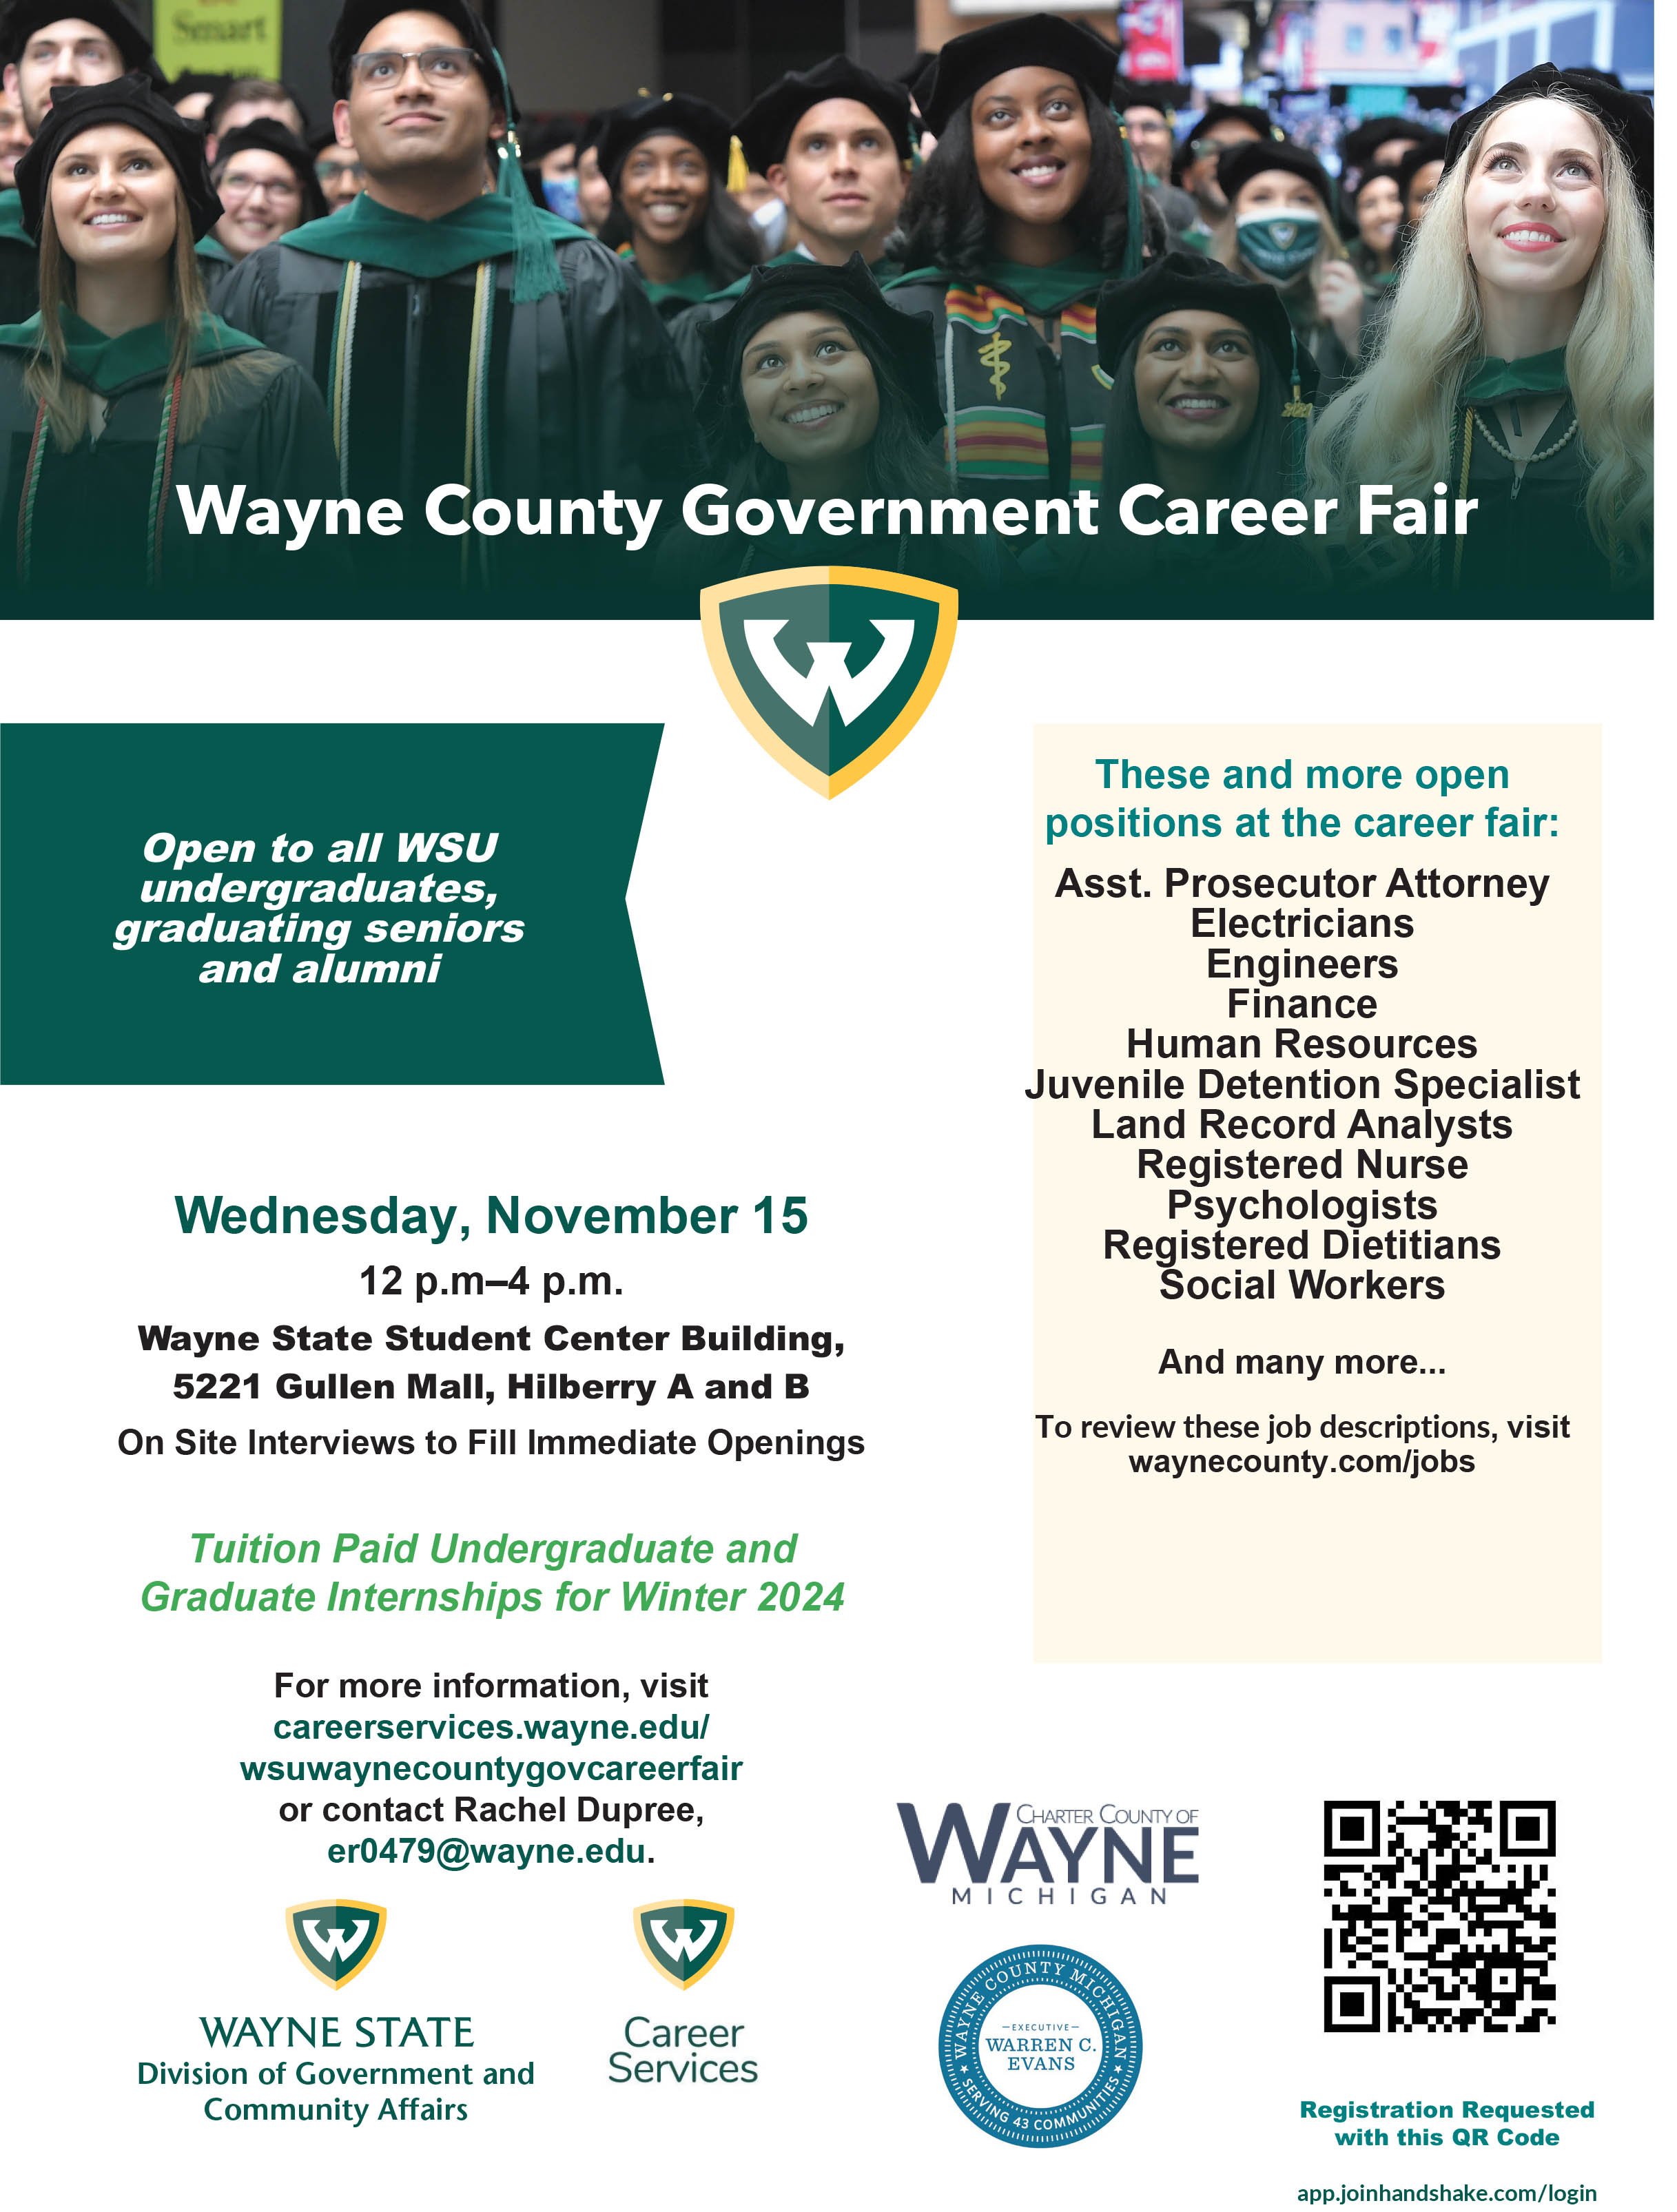 Wayne County Government Career Fair at WSU